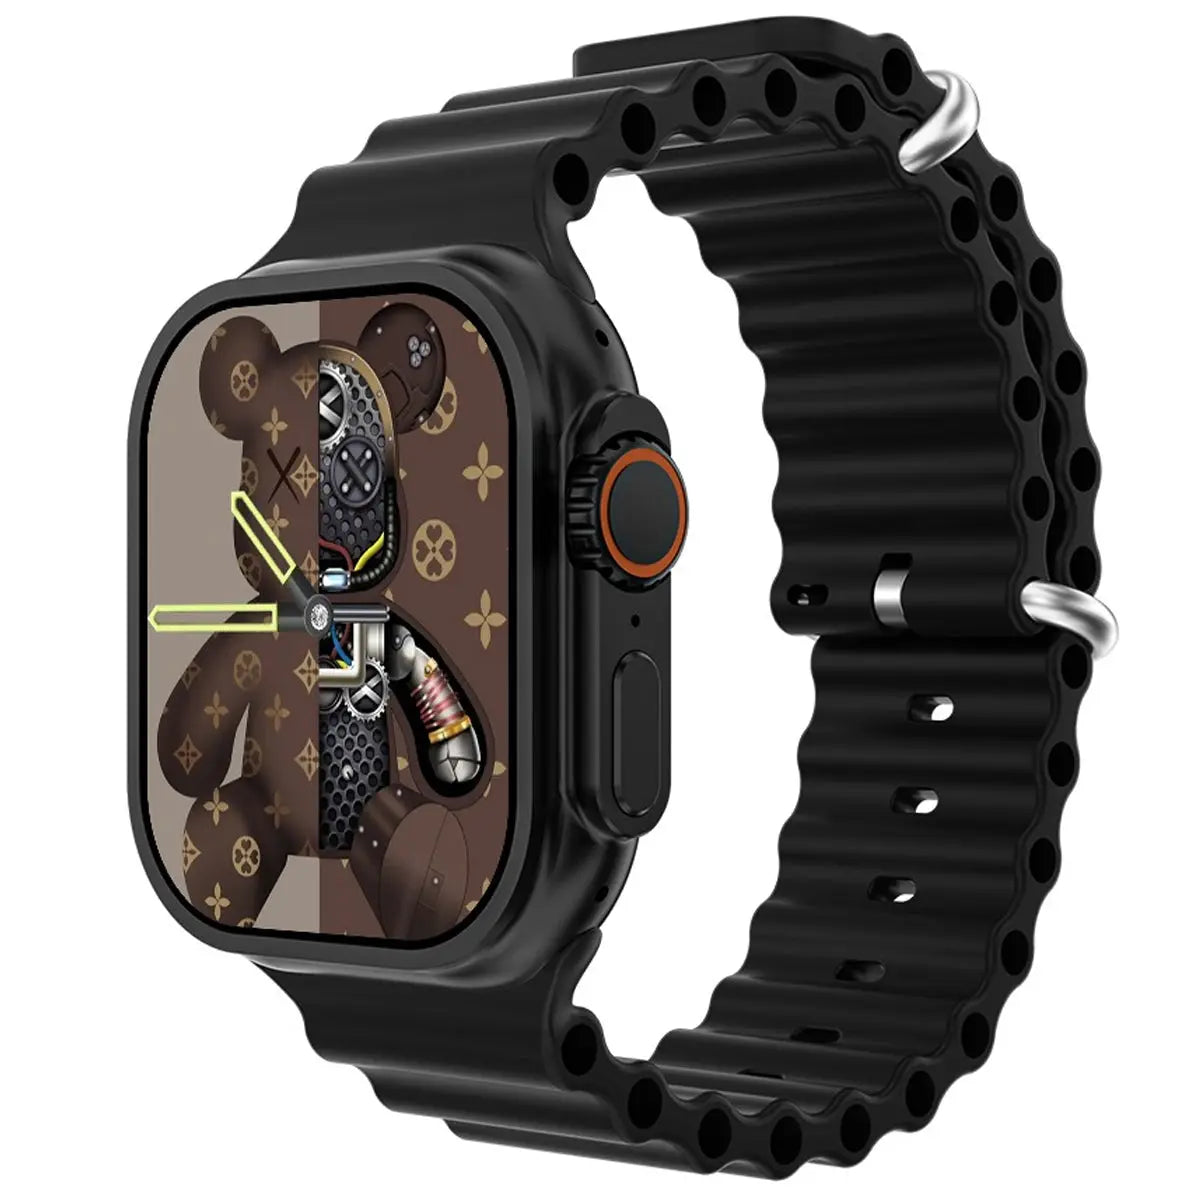 Reloj Inteligente Smartwatch Watch 9 Ultra Fralugio Llamadas